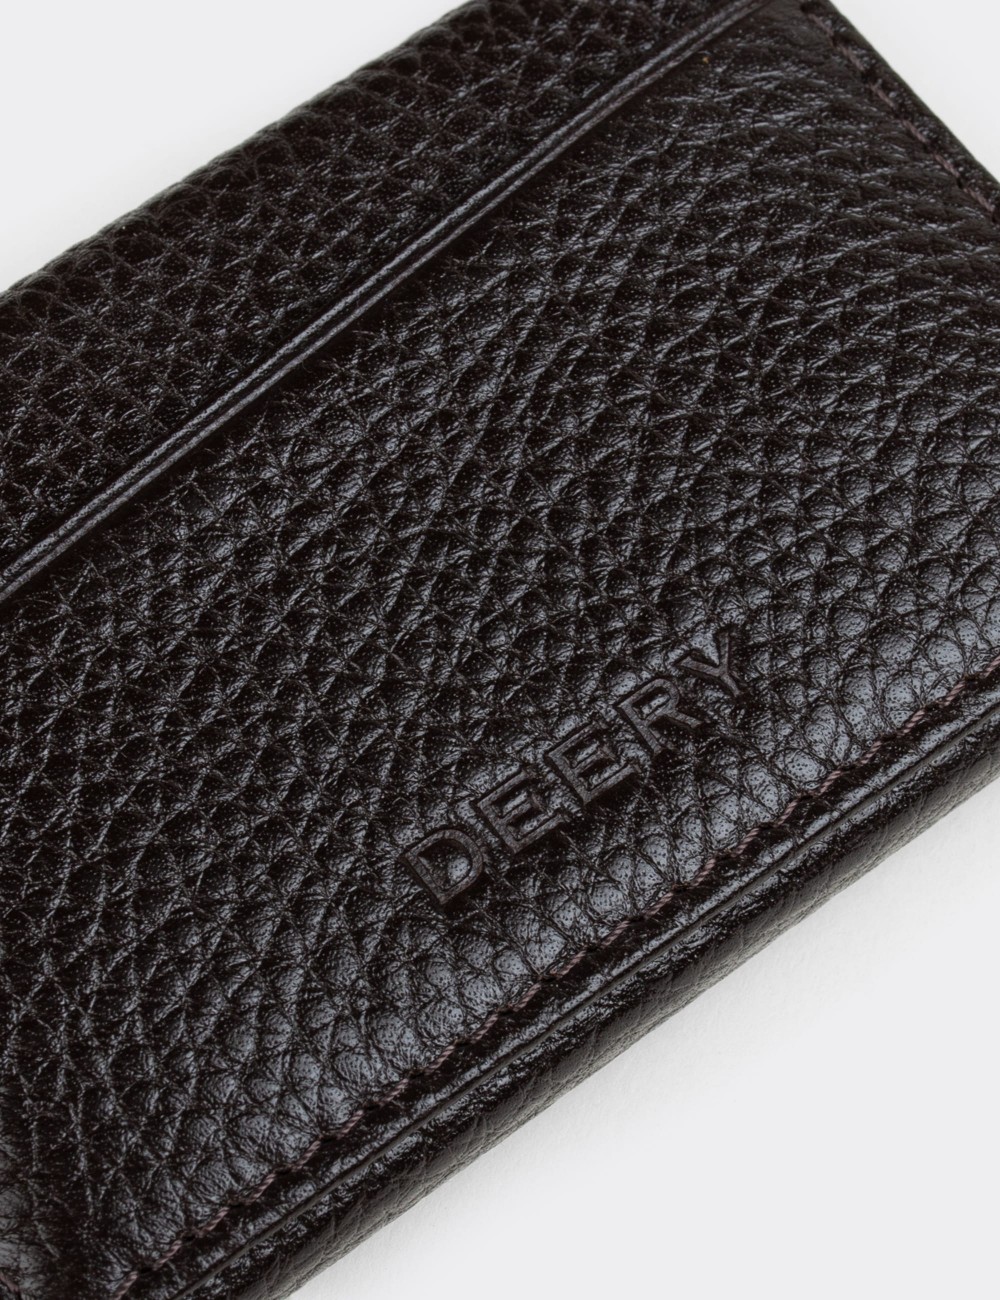  Leather Brow Men's Wallet - 00612MKHVZ01